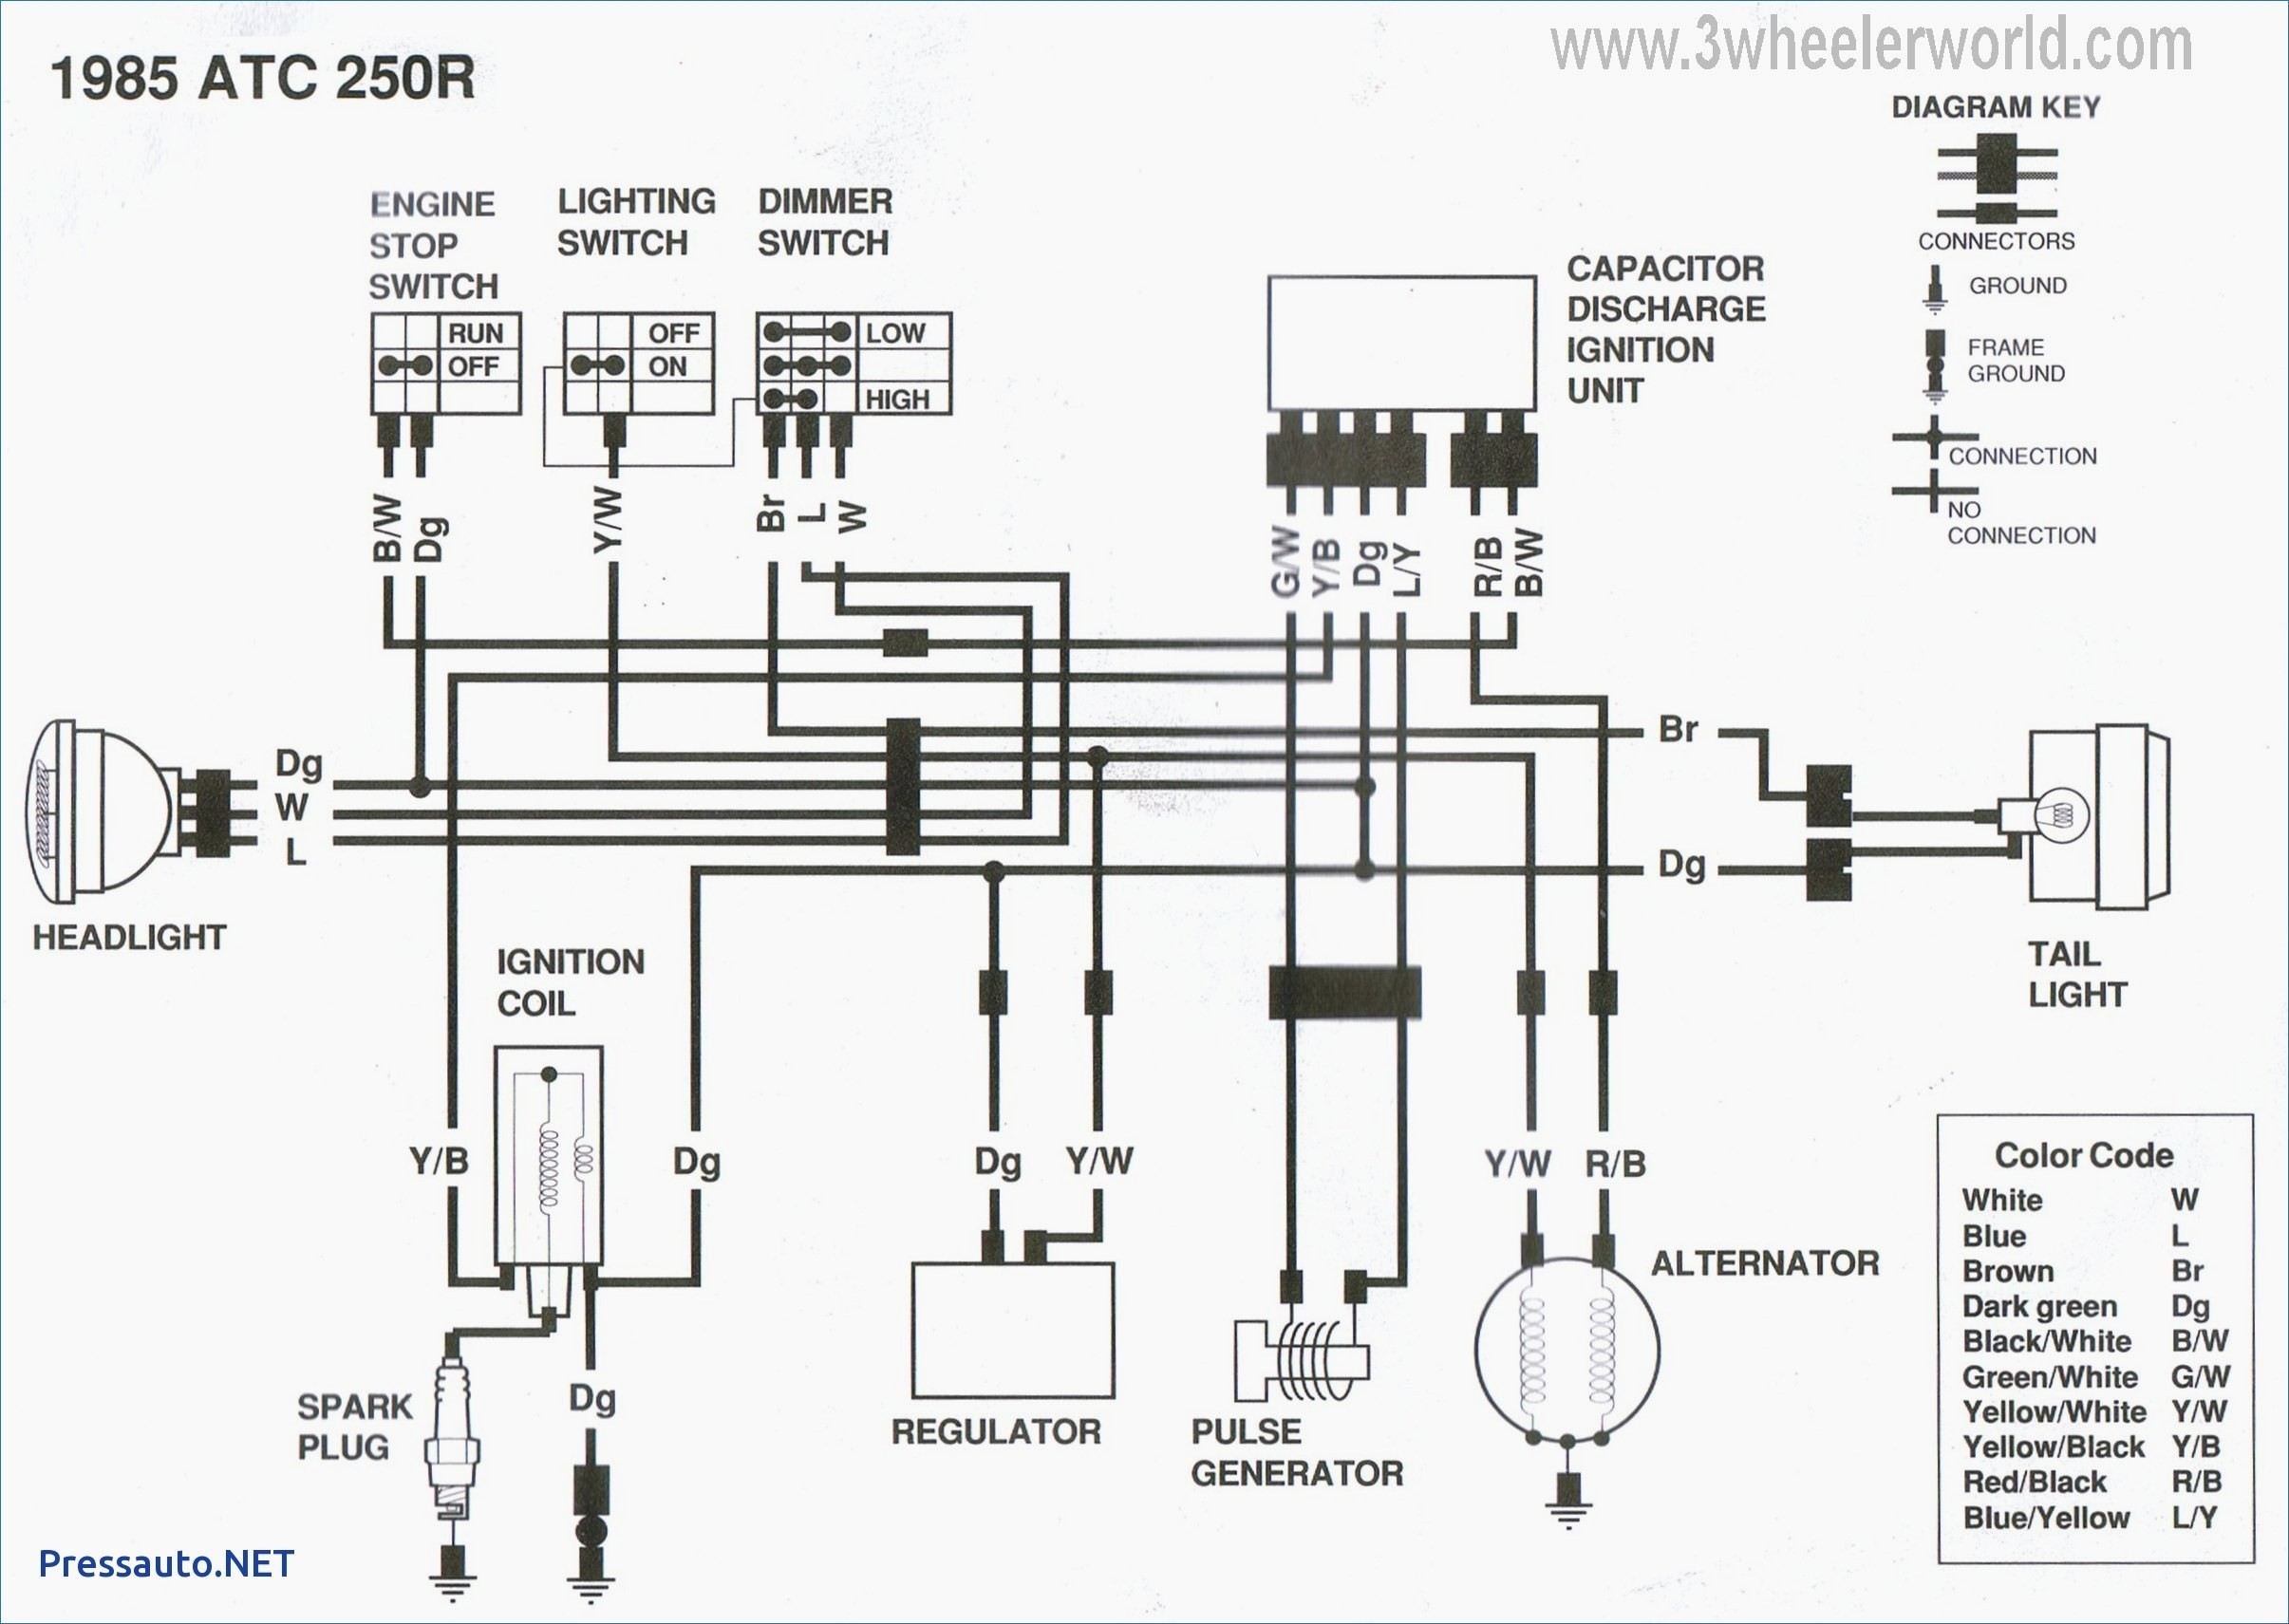 1993 Honda Prelude Engine Diagram 97 Prelude Fuse Box Diagram Wiring Diagram toolbox Of 1993 Honda Prelude Engine Diagram